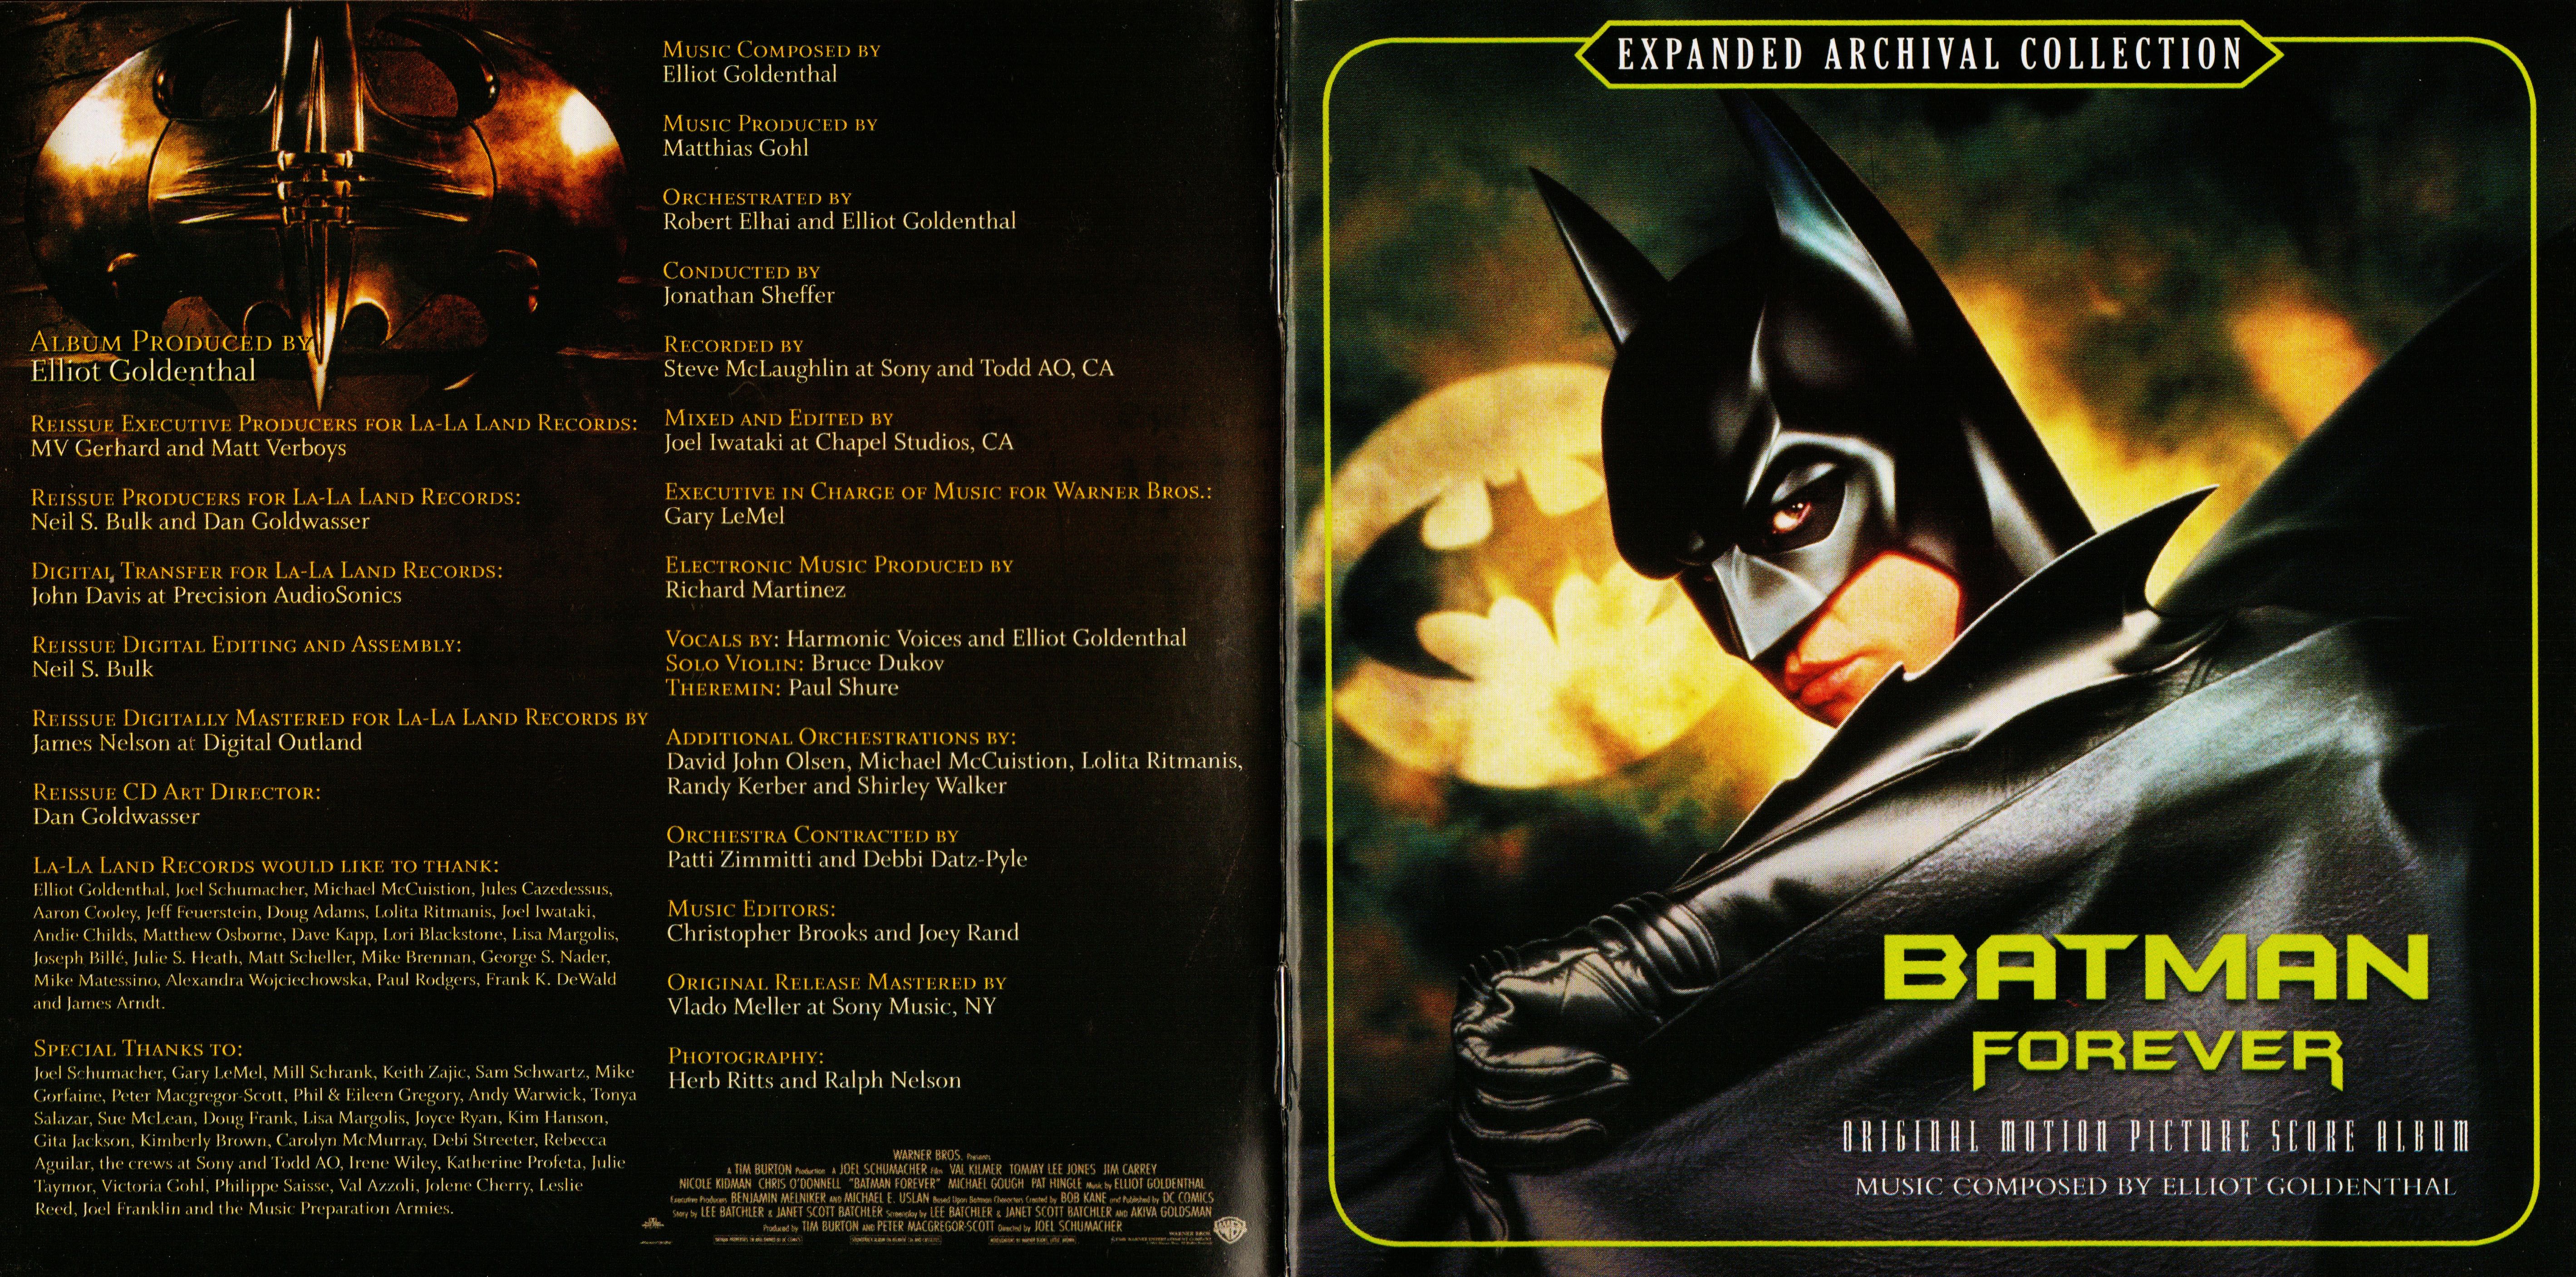 Release “Batman Forever: Original Motion Picture Score Album” by Elliot  Goldenthal - Cover Art - MusicBrainz